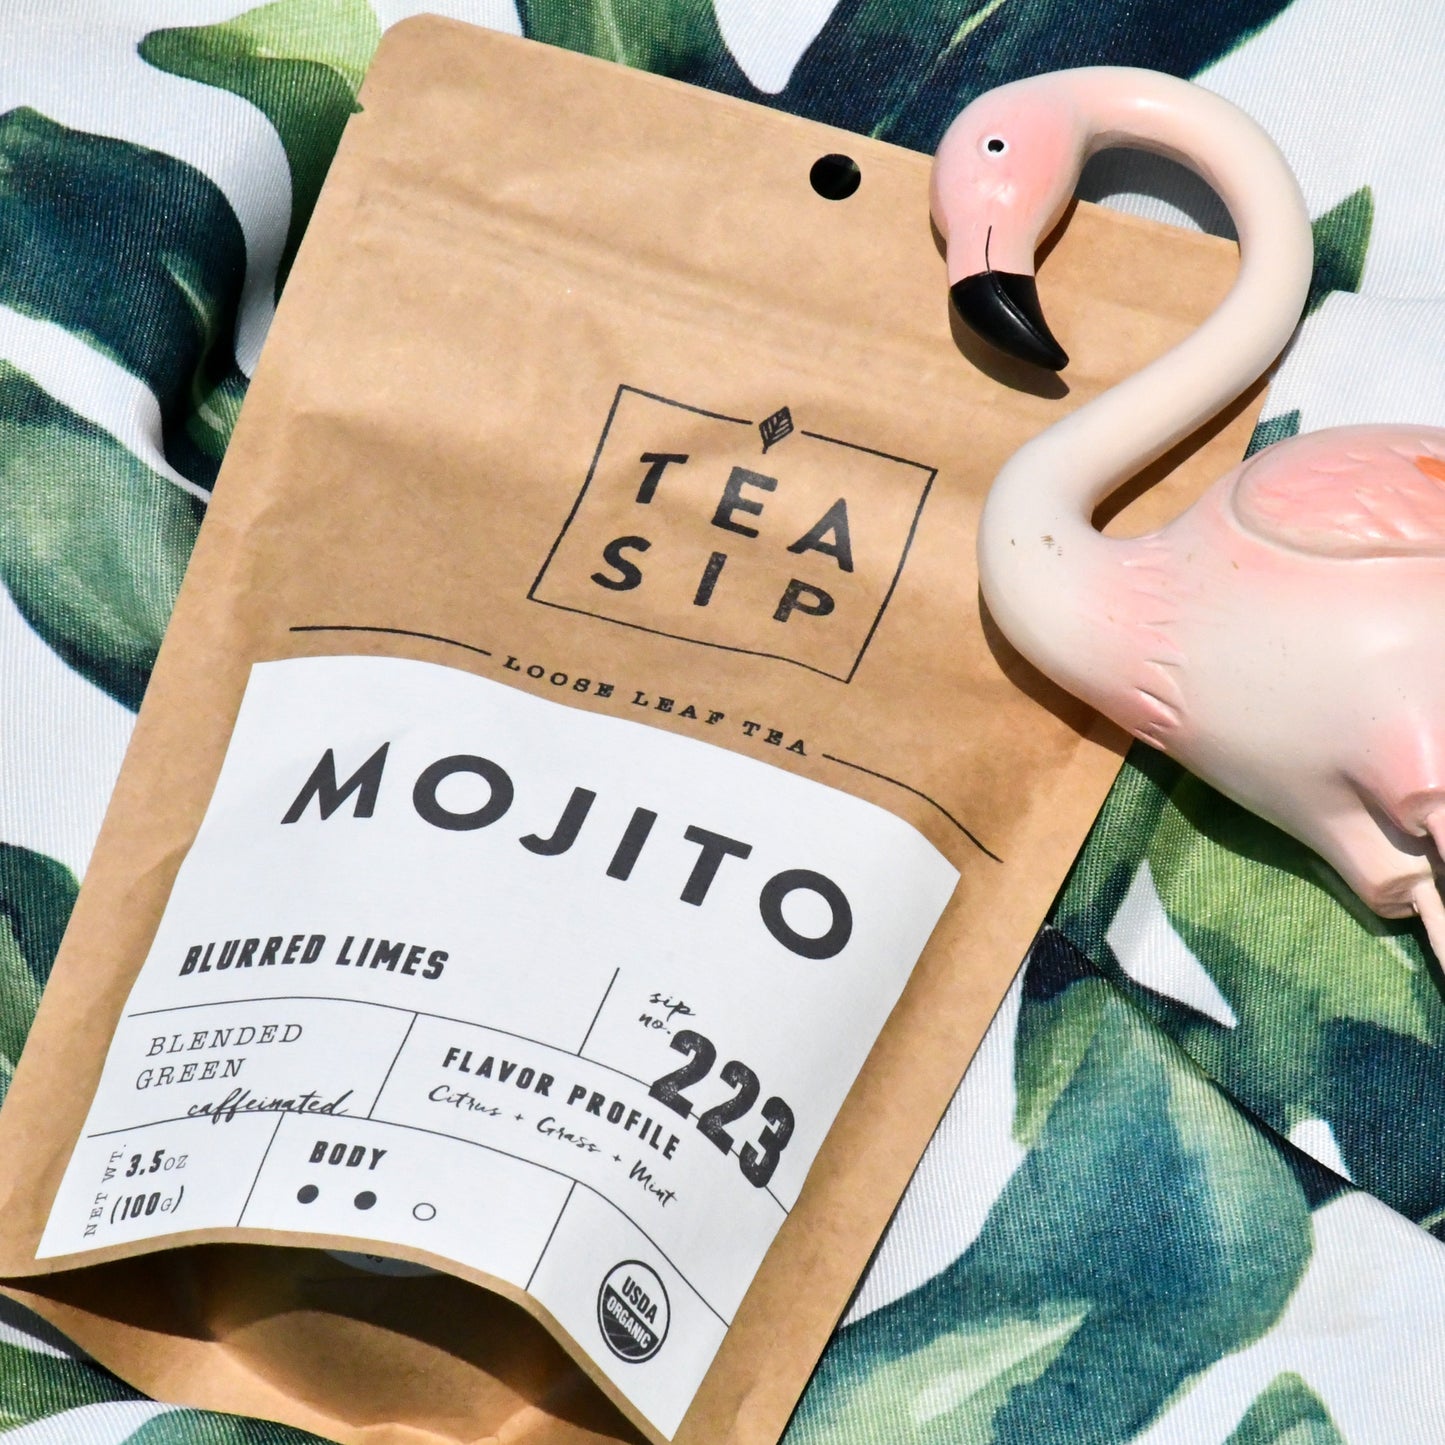 Tea Sip “Mojito” Tea